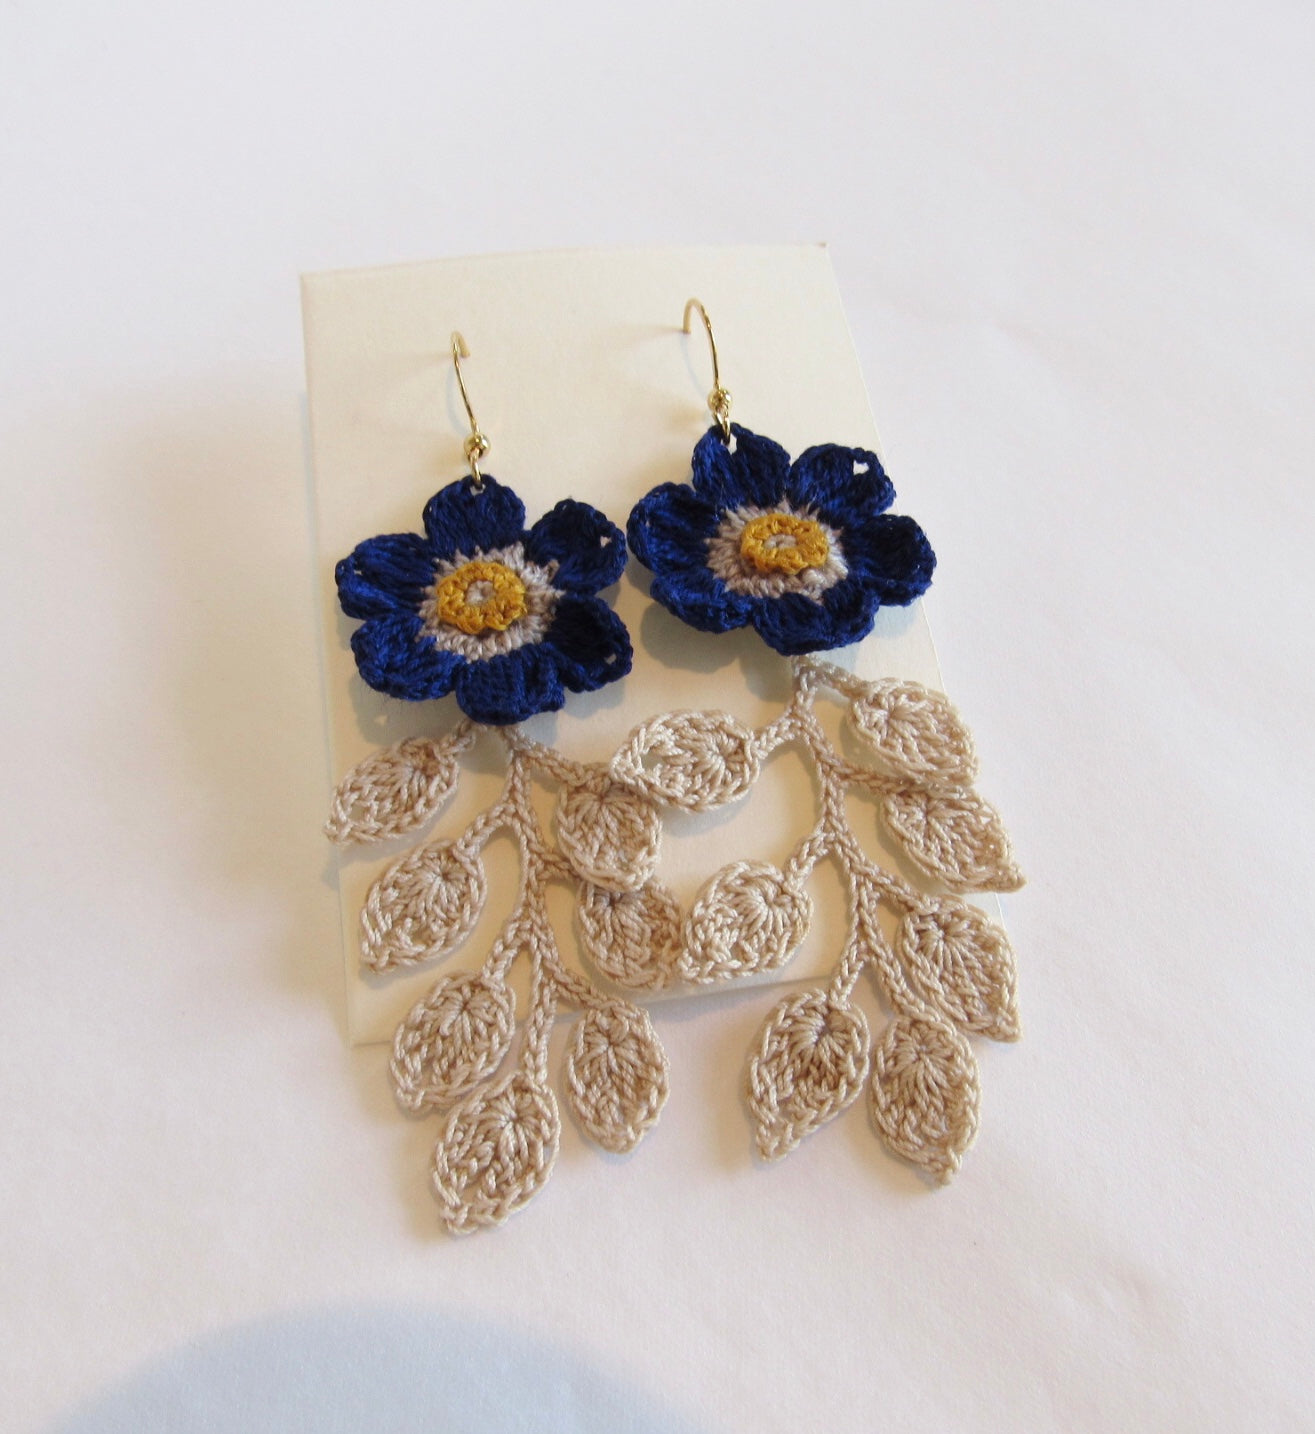 Hand crocheted wild flower earrings